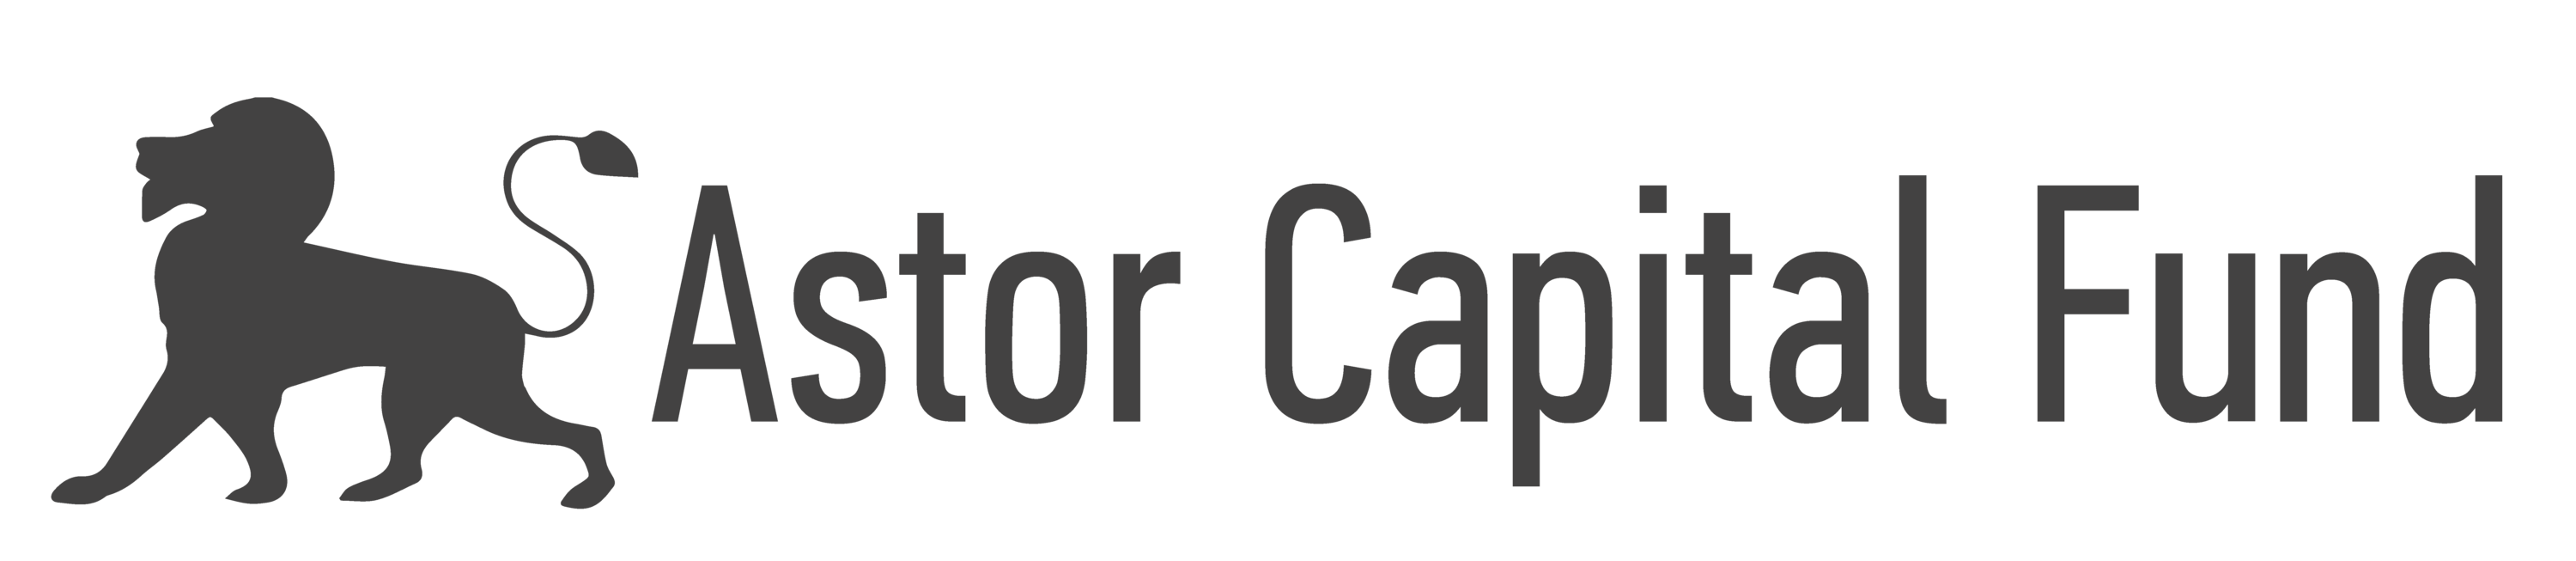 Astor Capital Fund Logo